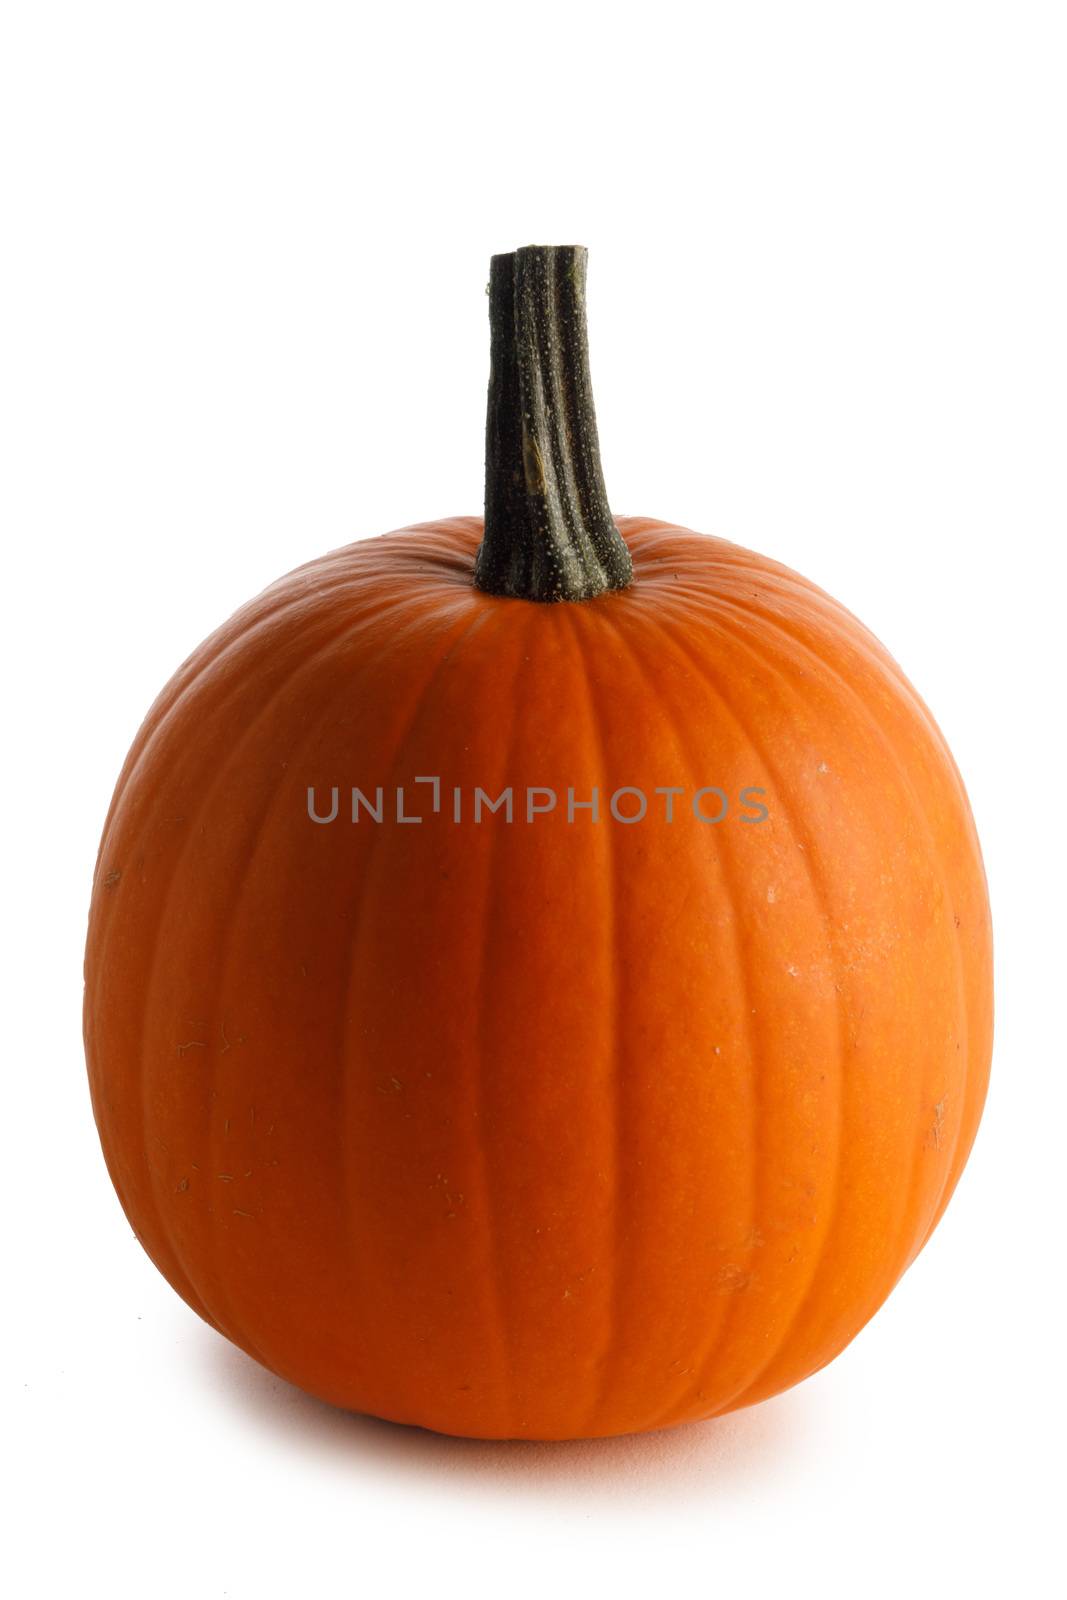 One orange pumpkin by Yellowj